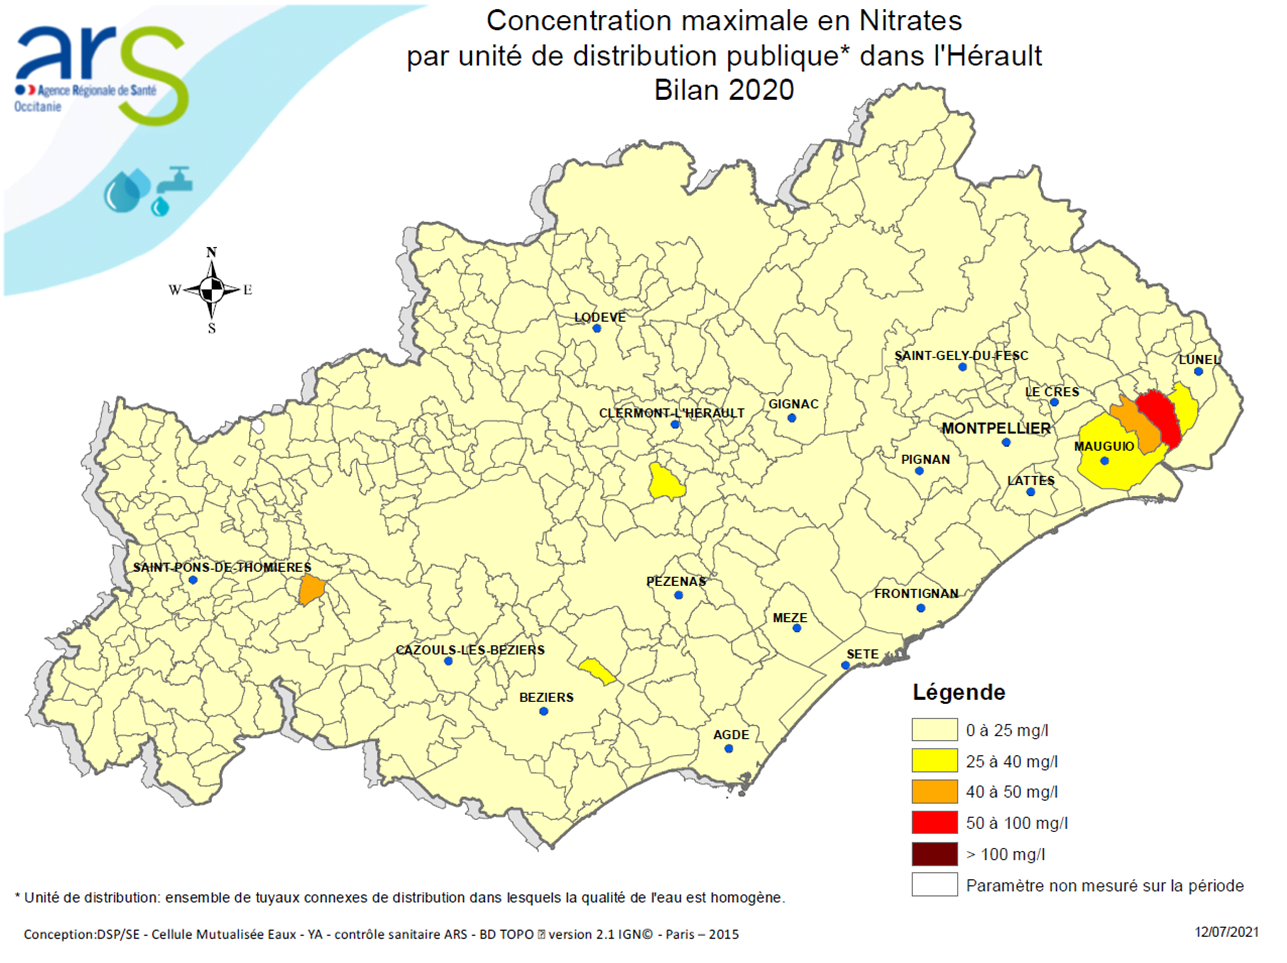 Nitrates Hérault (Bilan eau 2020)